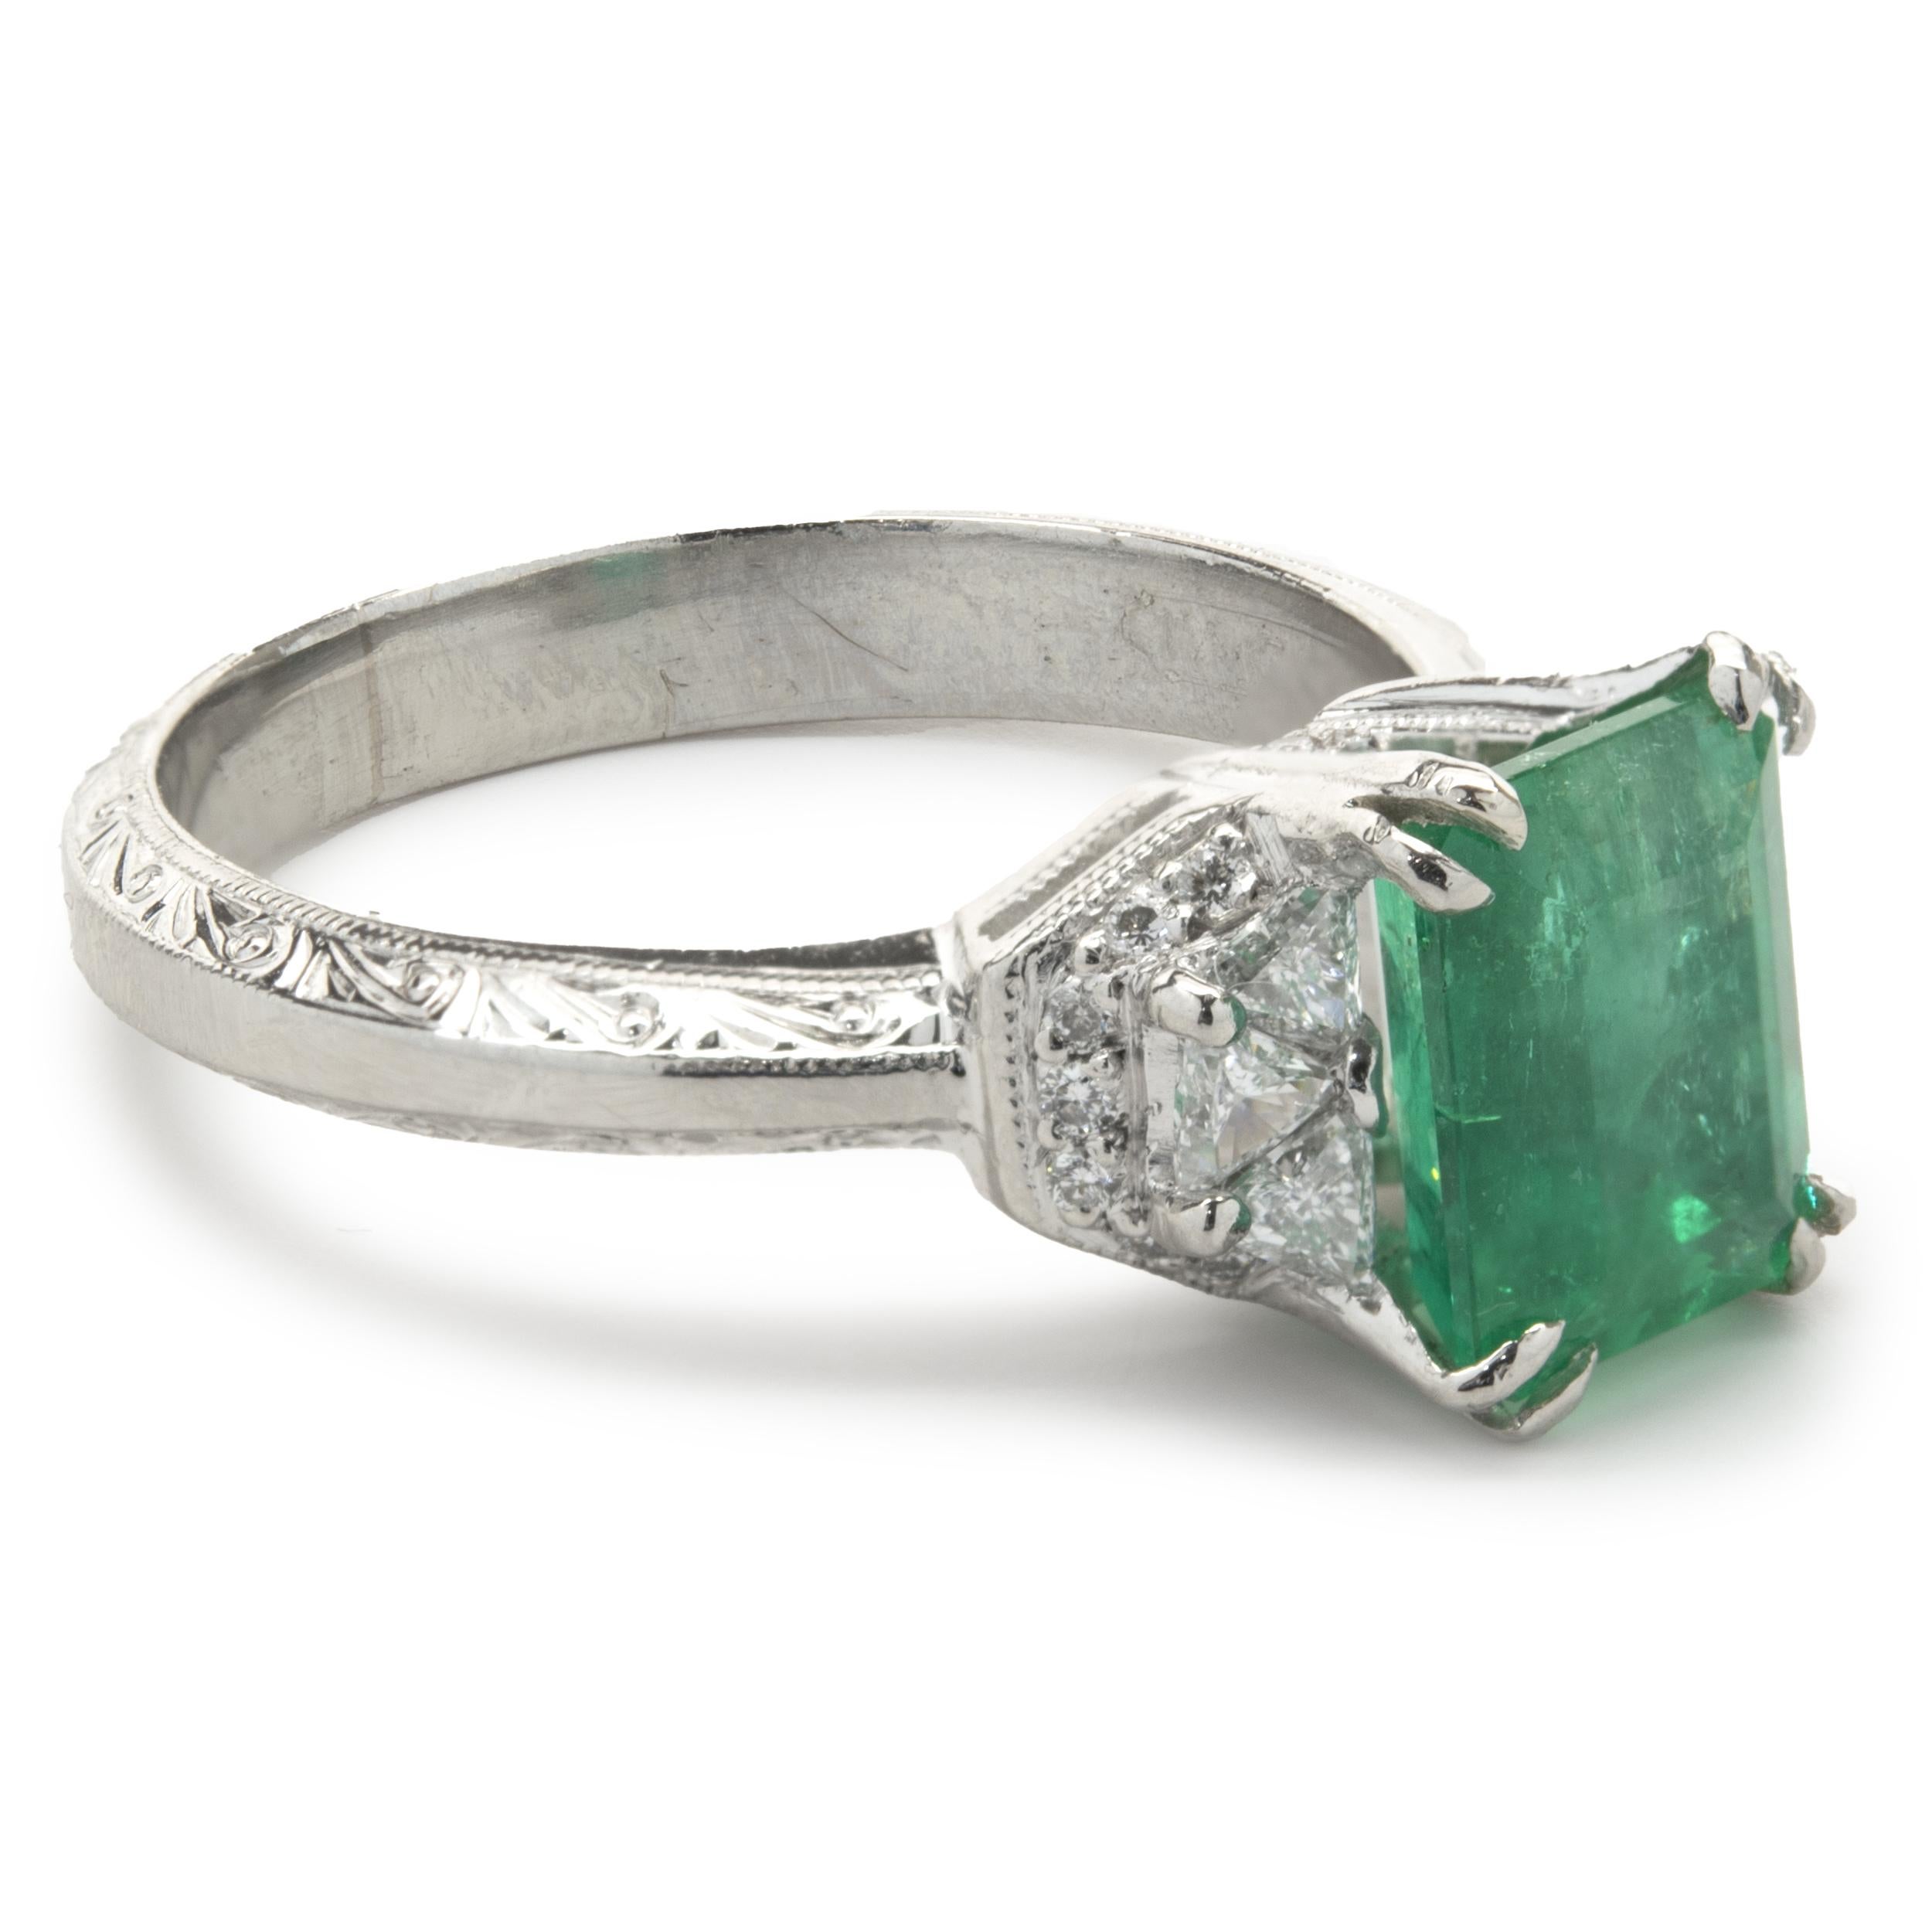 Designer: Tacori
Material: platinum
Emerald: 1 emerald cut = 1.88ct
Color: Kelly Green
Clarity: AAA
Diamond: 6 trillion cut = 0.60cttw
Color: H
Clarity: SI1
Diamond: 14 round cut = .07cttw
Color: G / H
Clarity: SI1
Dimensions: ring top measures